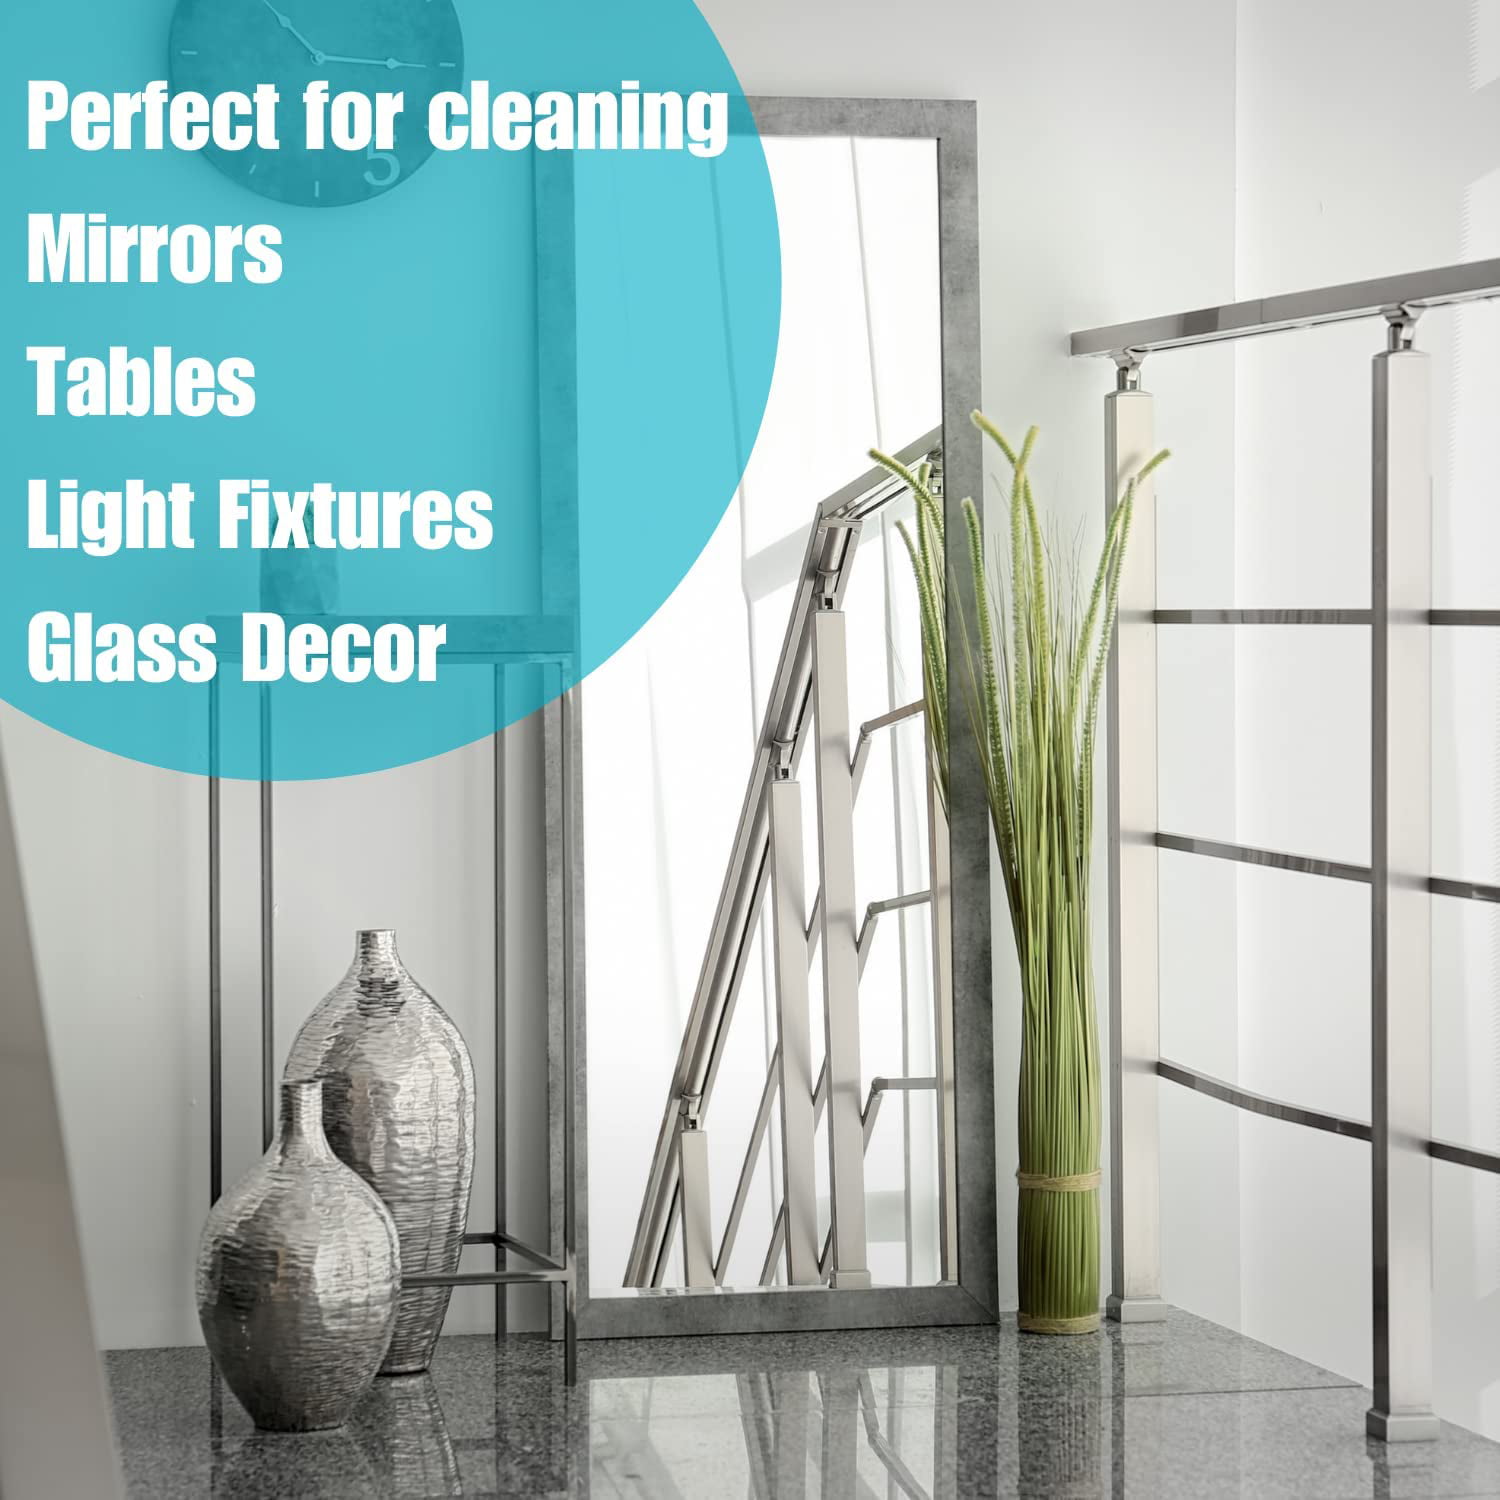 Glass Perfect: Quality streak-free, tint-safe window and glass